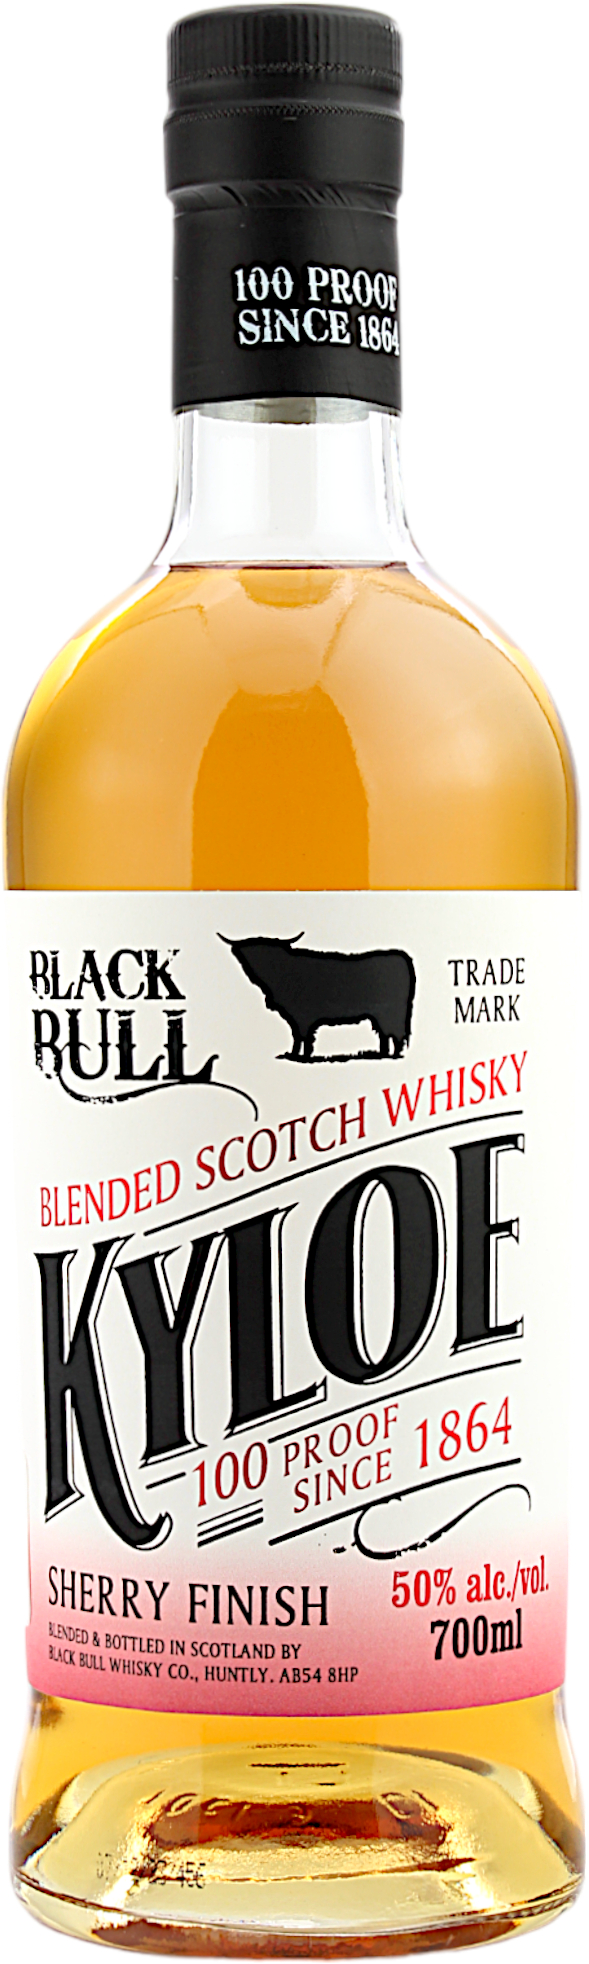 Black Bull Kyloe Sherry Finish 50.0% 0,7l